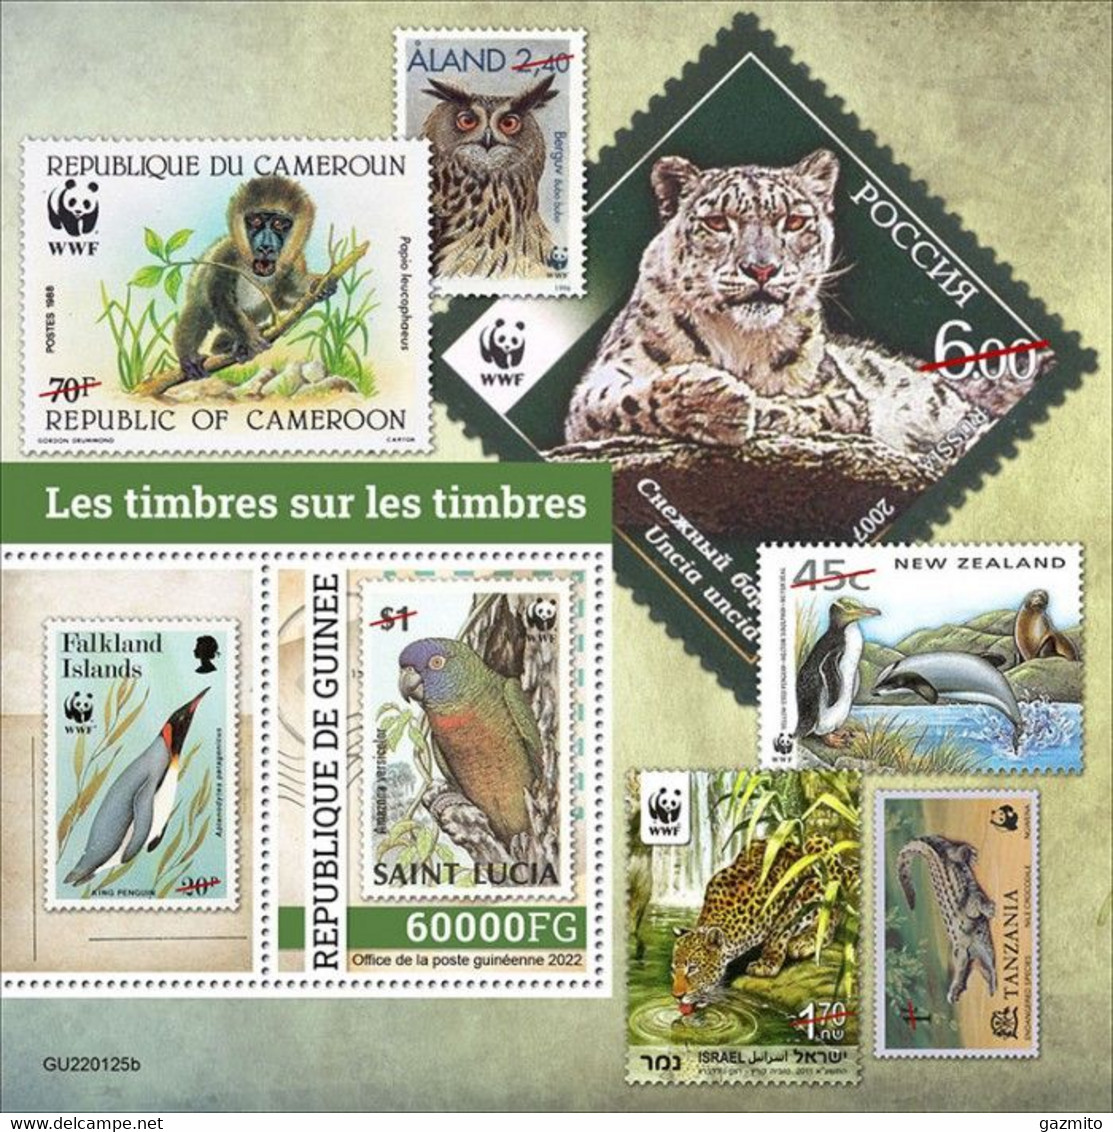 Guinea 2022, WWW On Stamp, Monkey, BF - Chimpanzees